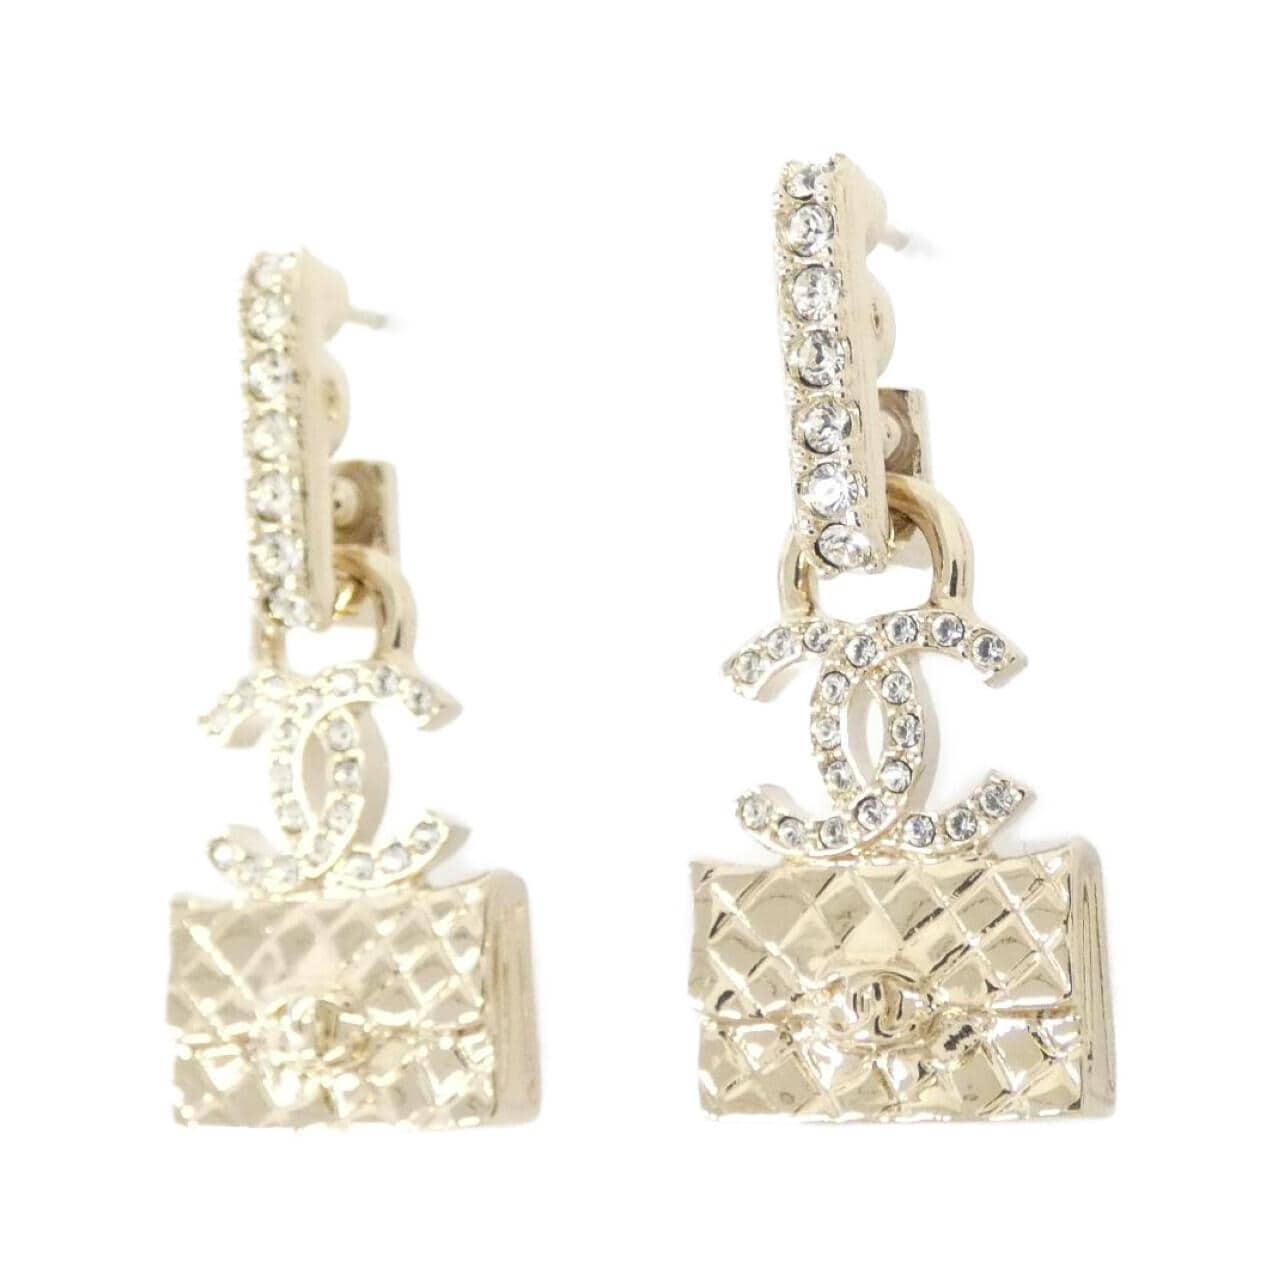 [Unused items] CHANEL ABB537 earrings